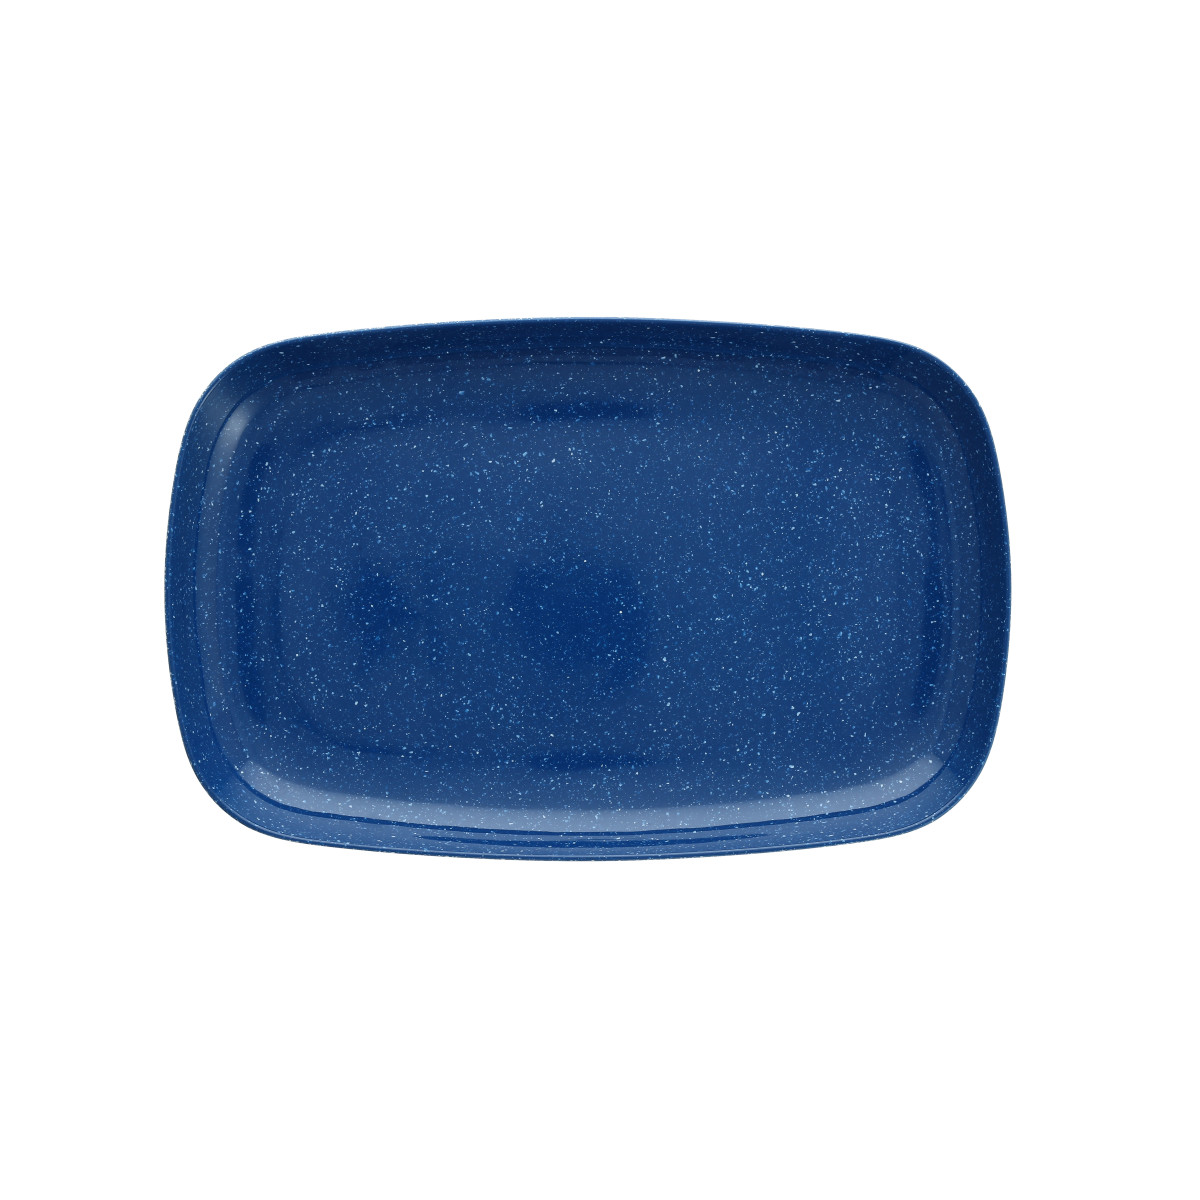 Camp Blue Coupe Platter 14x9"